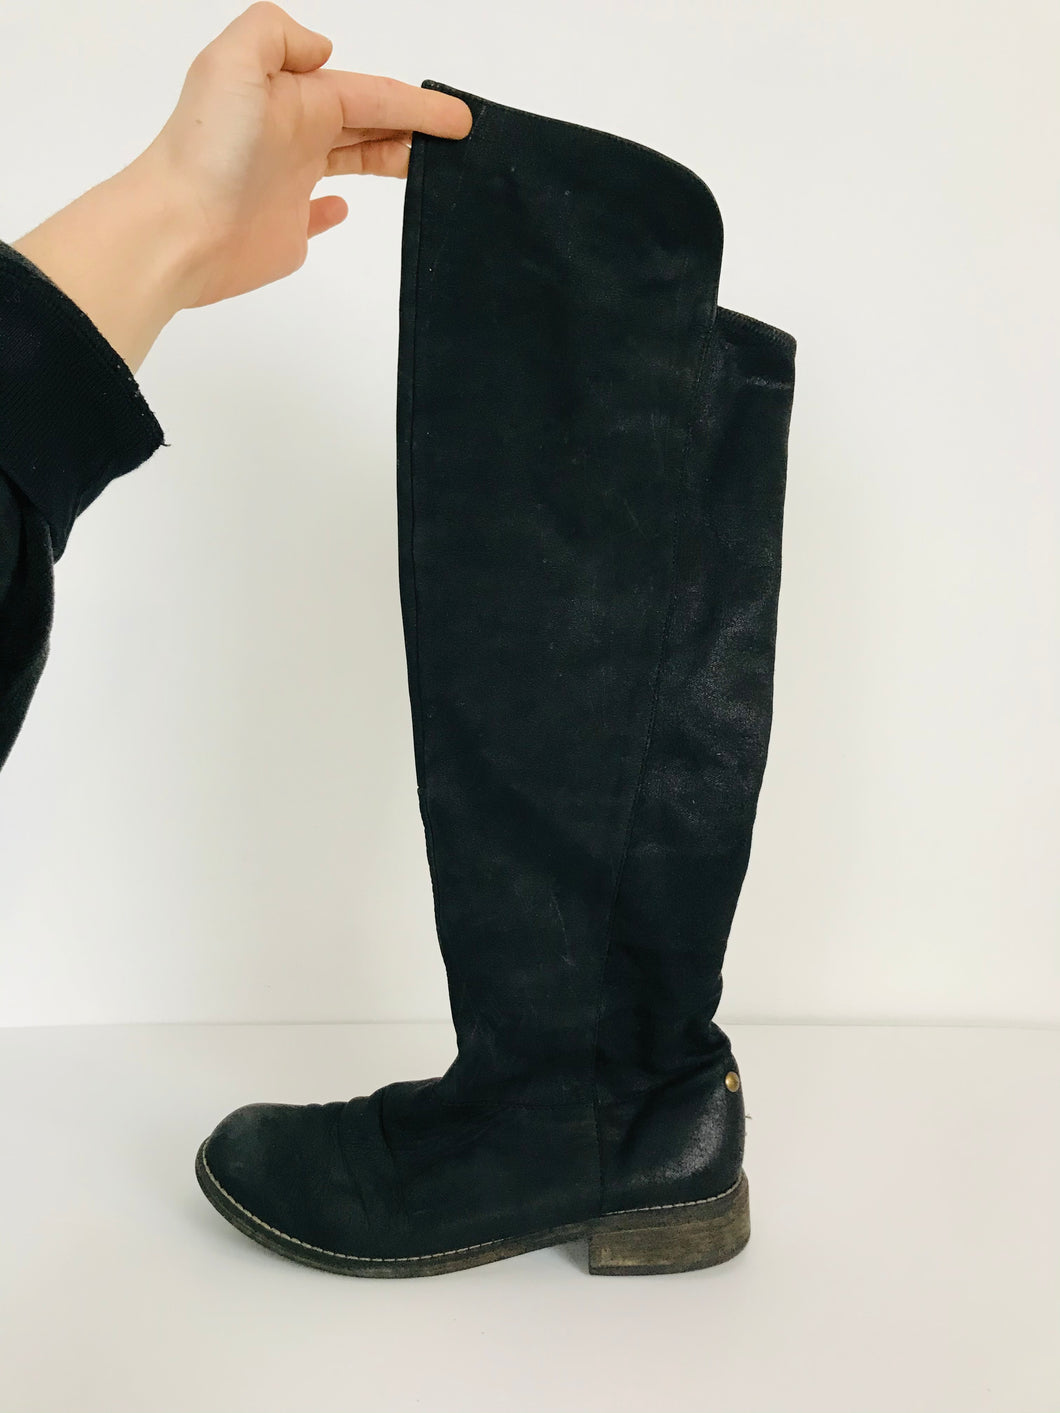 Tally Women’s Knee High Boots | UK4 | Brown